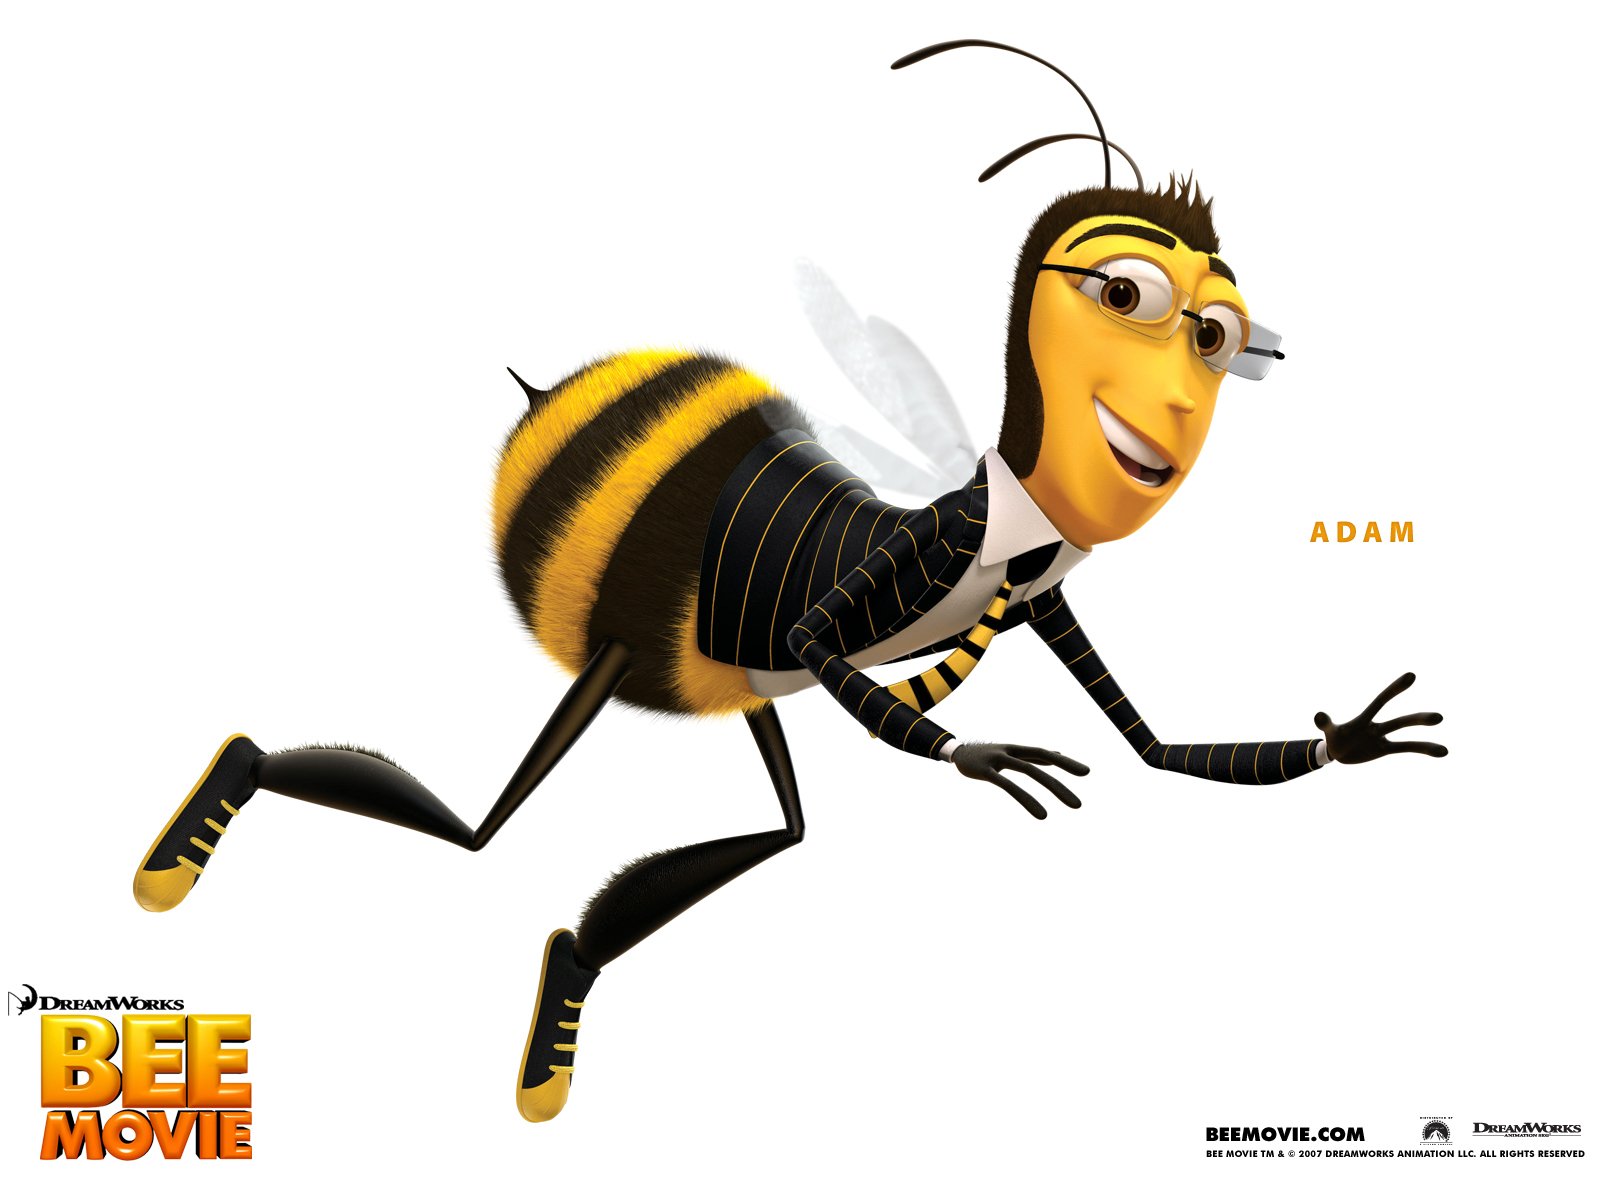 High Resolution Wallpaper | Bee Movie 1600x1200 px